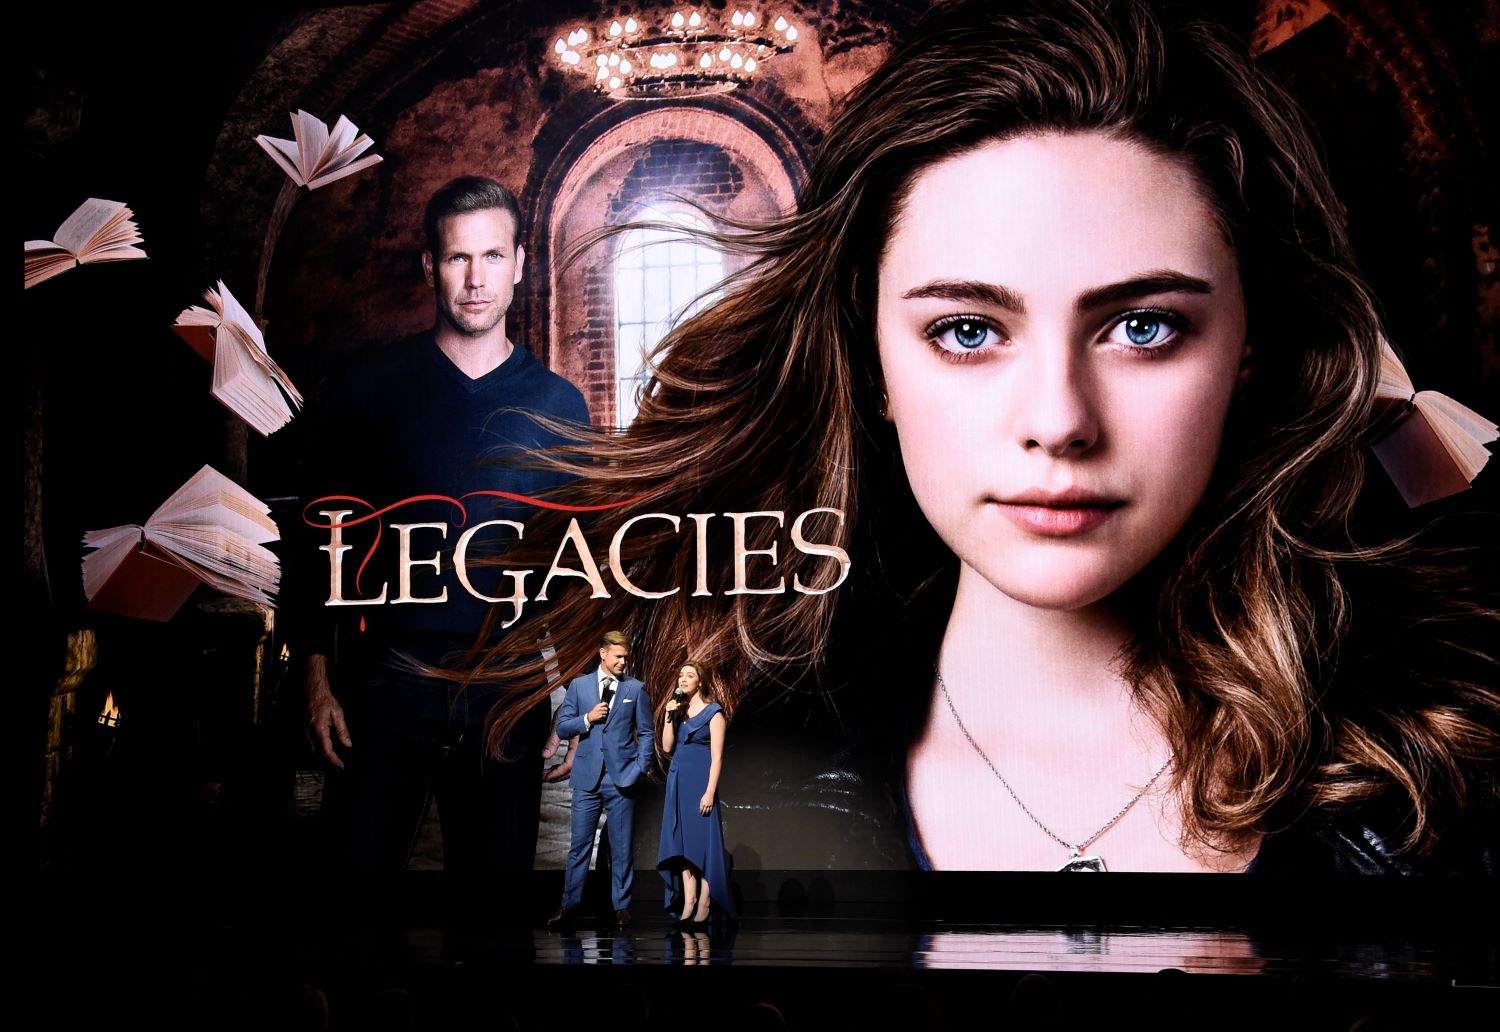 When will ‘Legacies’ Season 4 be on Netflix?